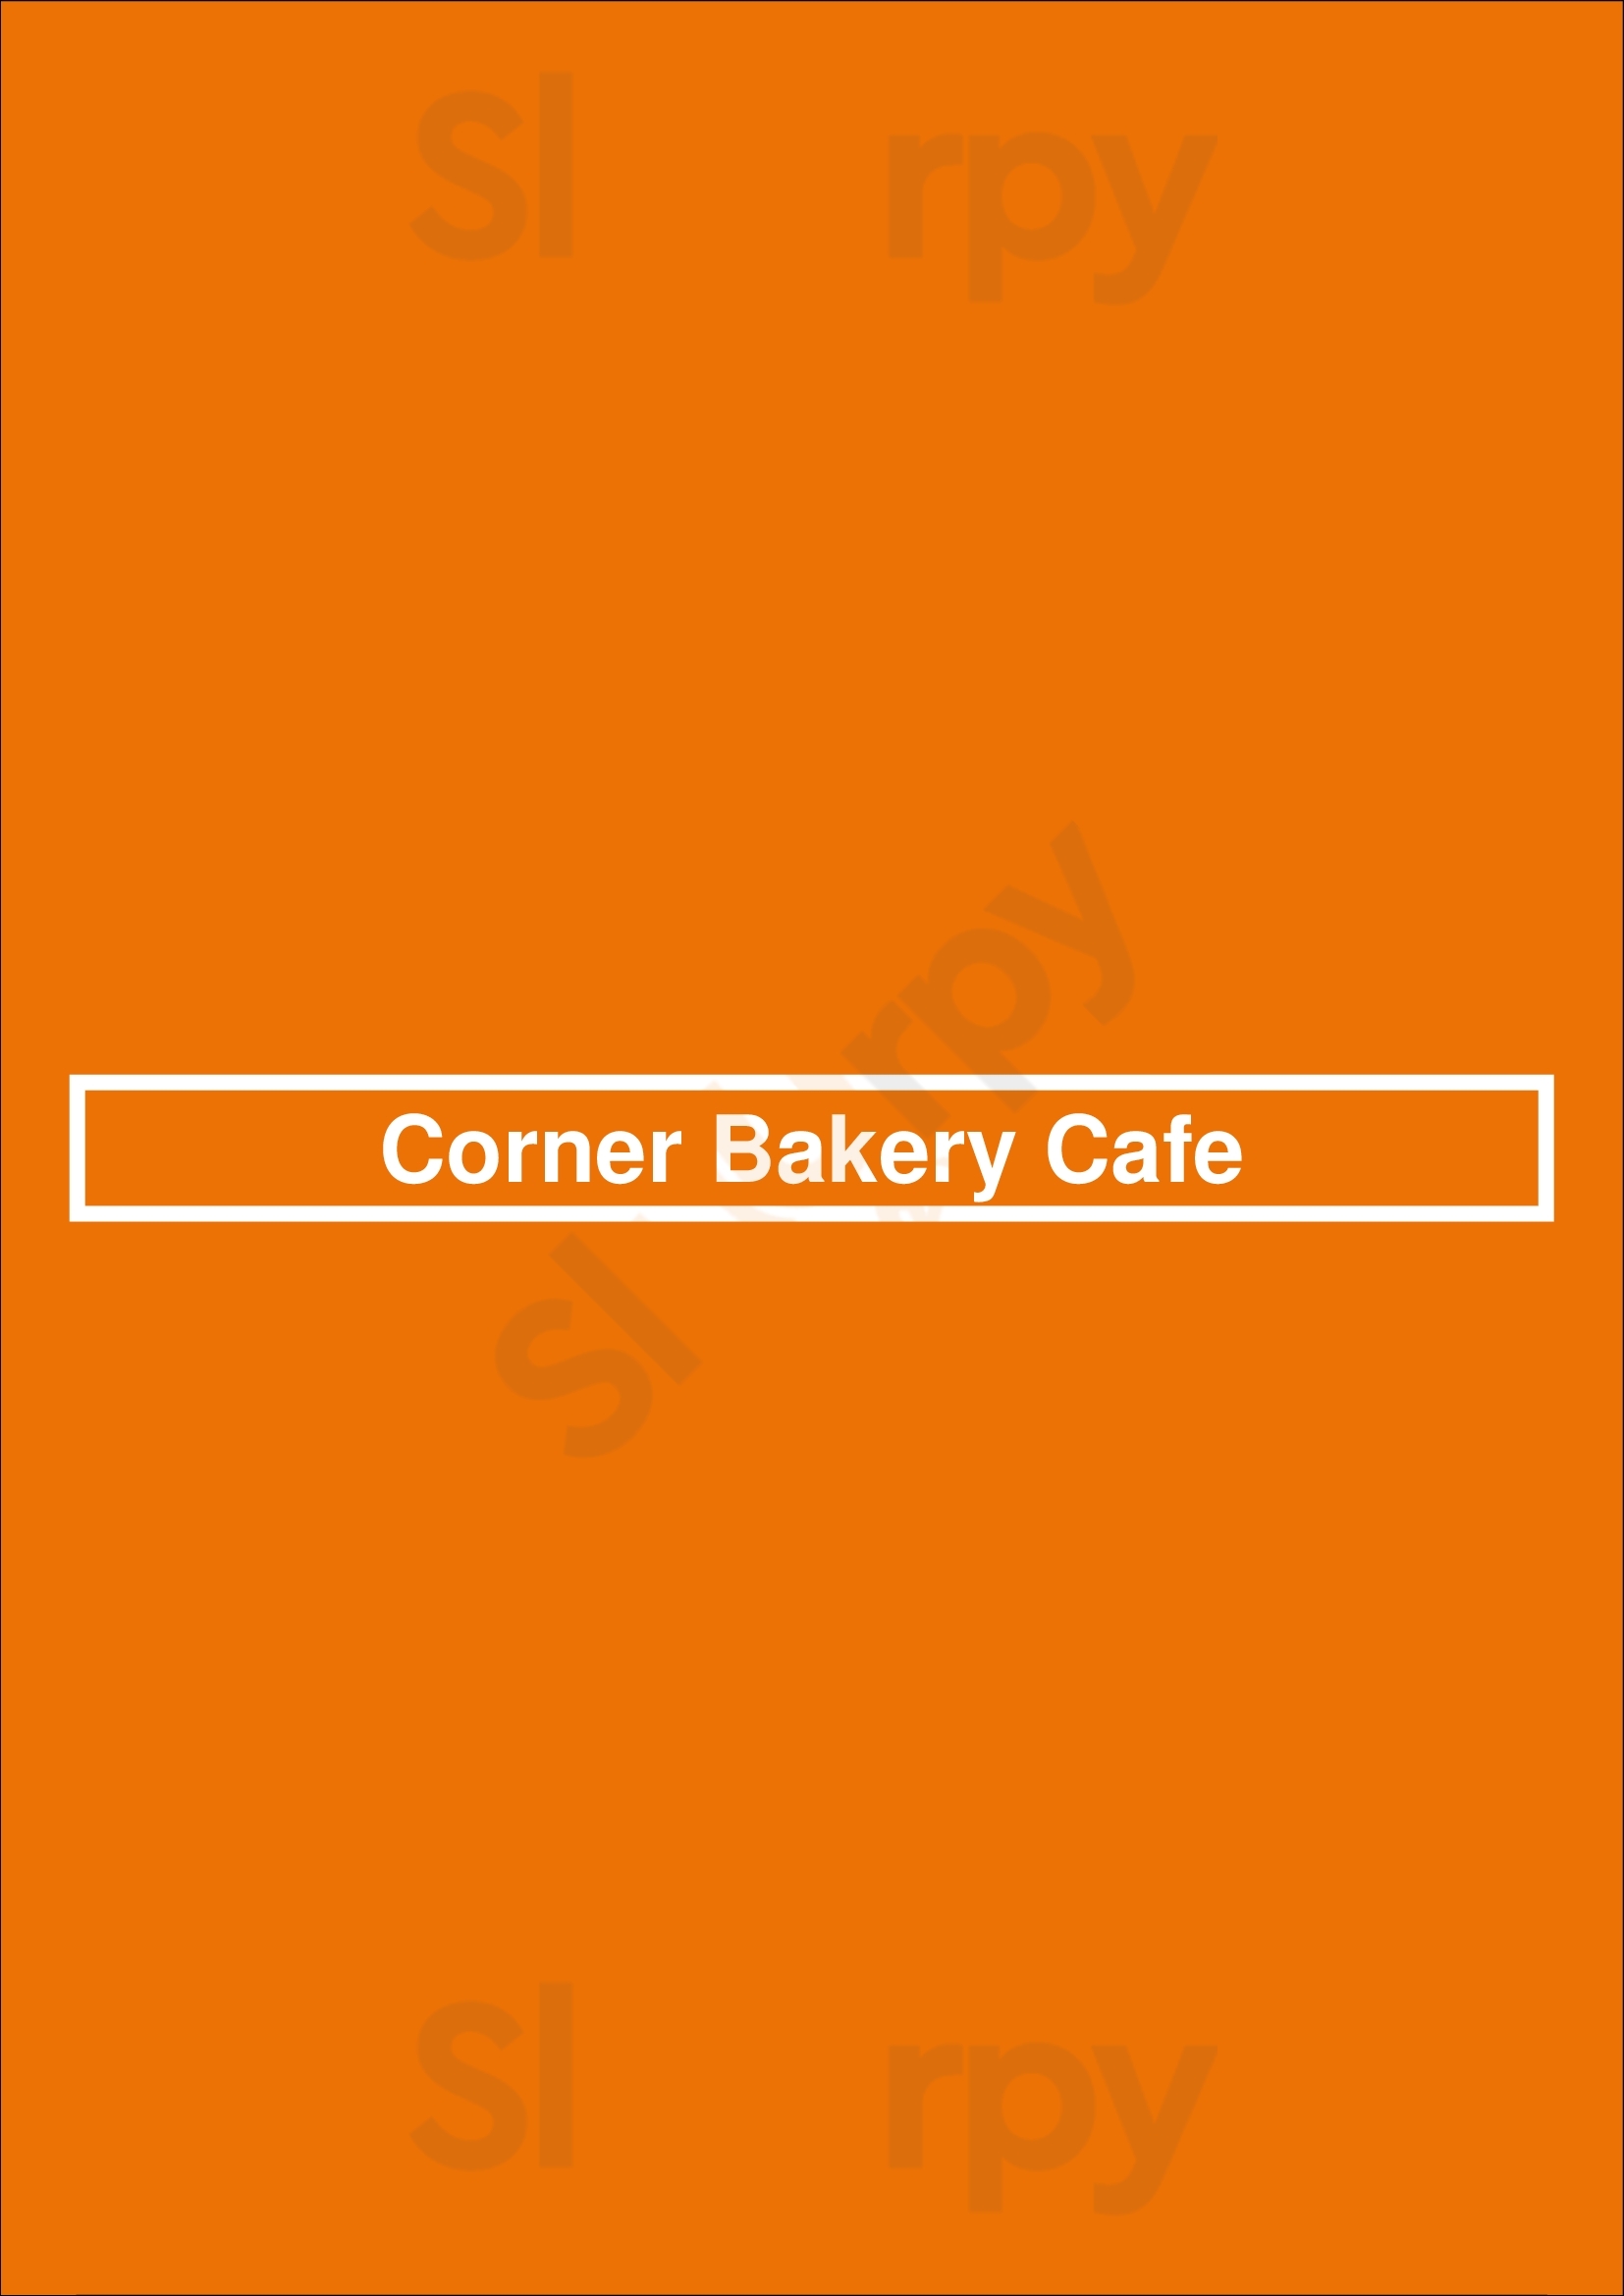 Corner Bakery Cafe Austin Menu - 1